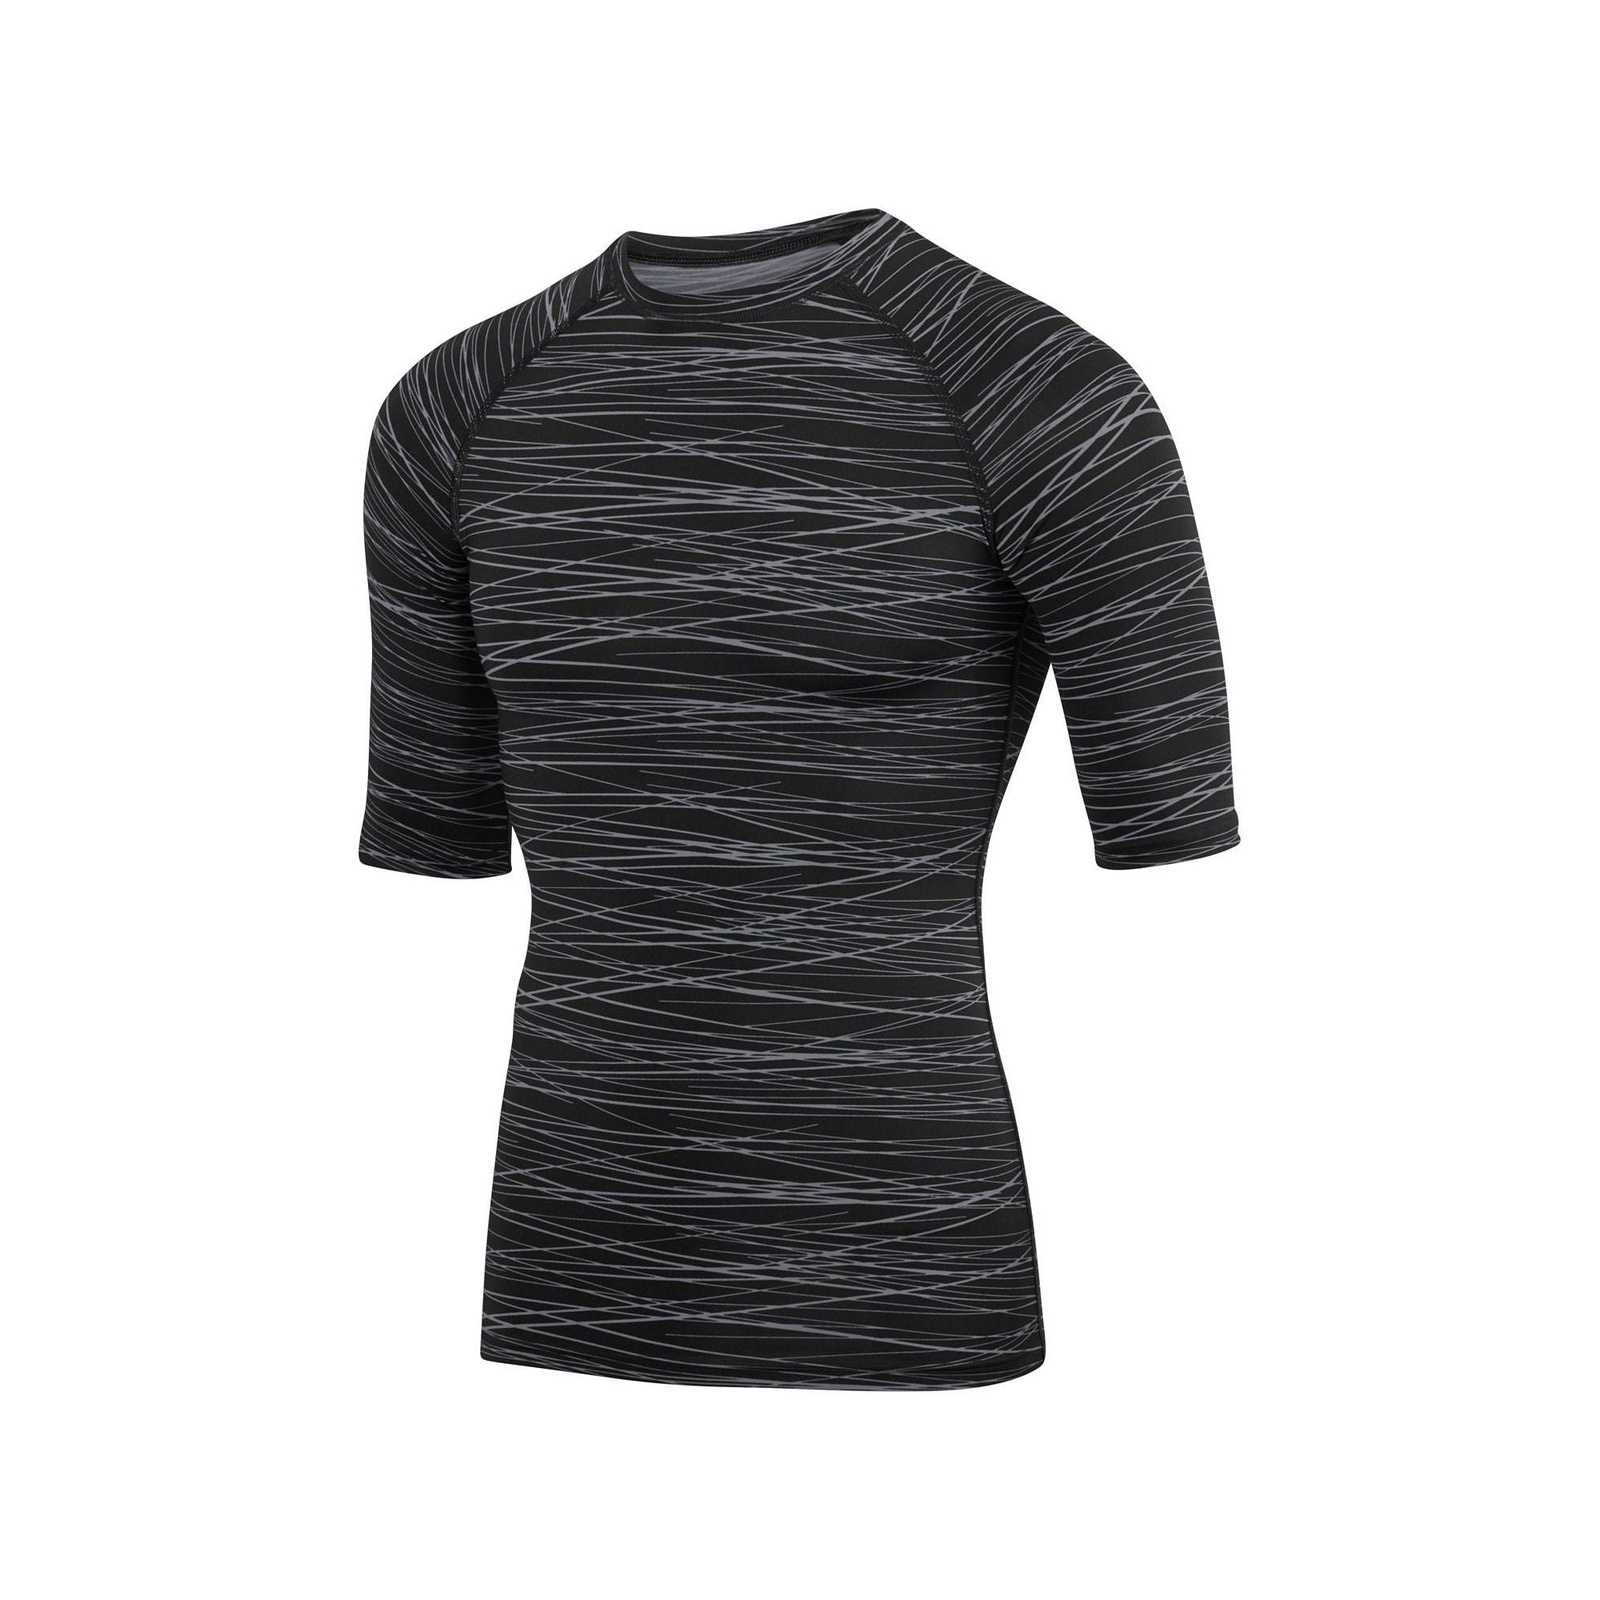 Augusta 2606 Hyperform Compression Half Sleeve Shirt - Black Graphite Print - HIT a Double